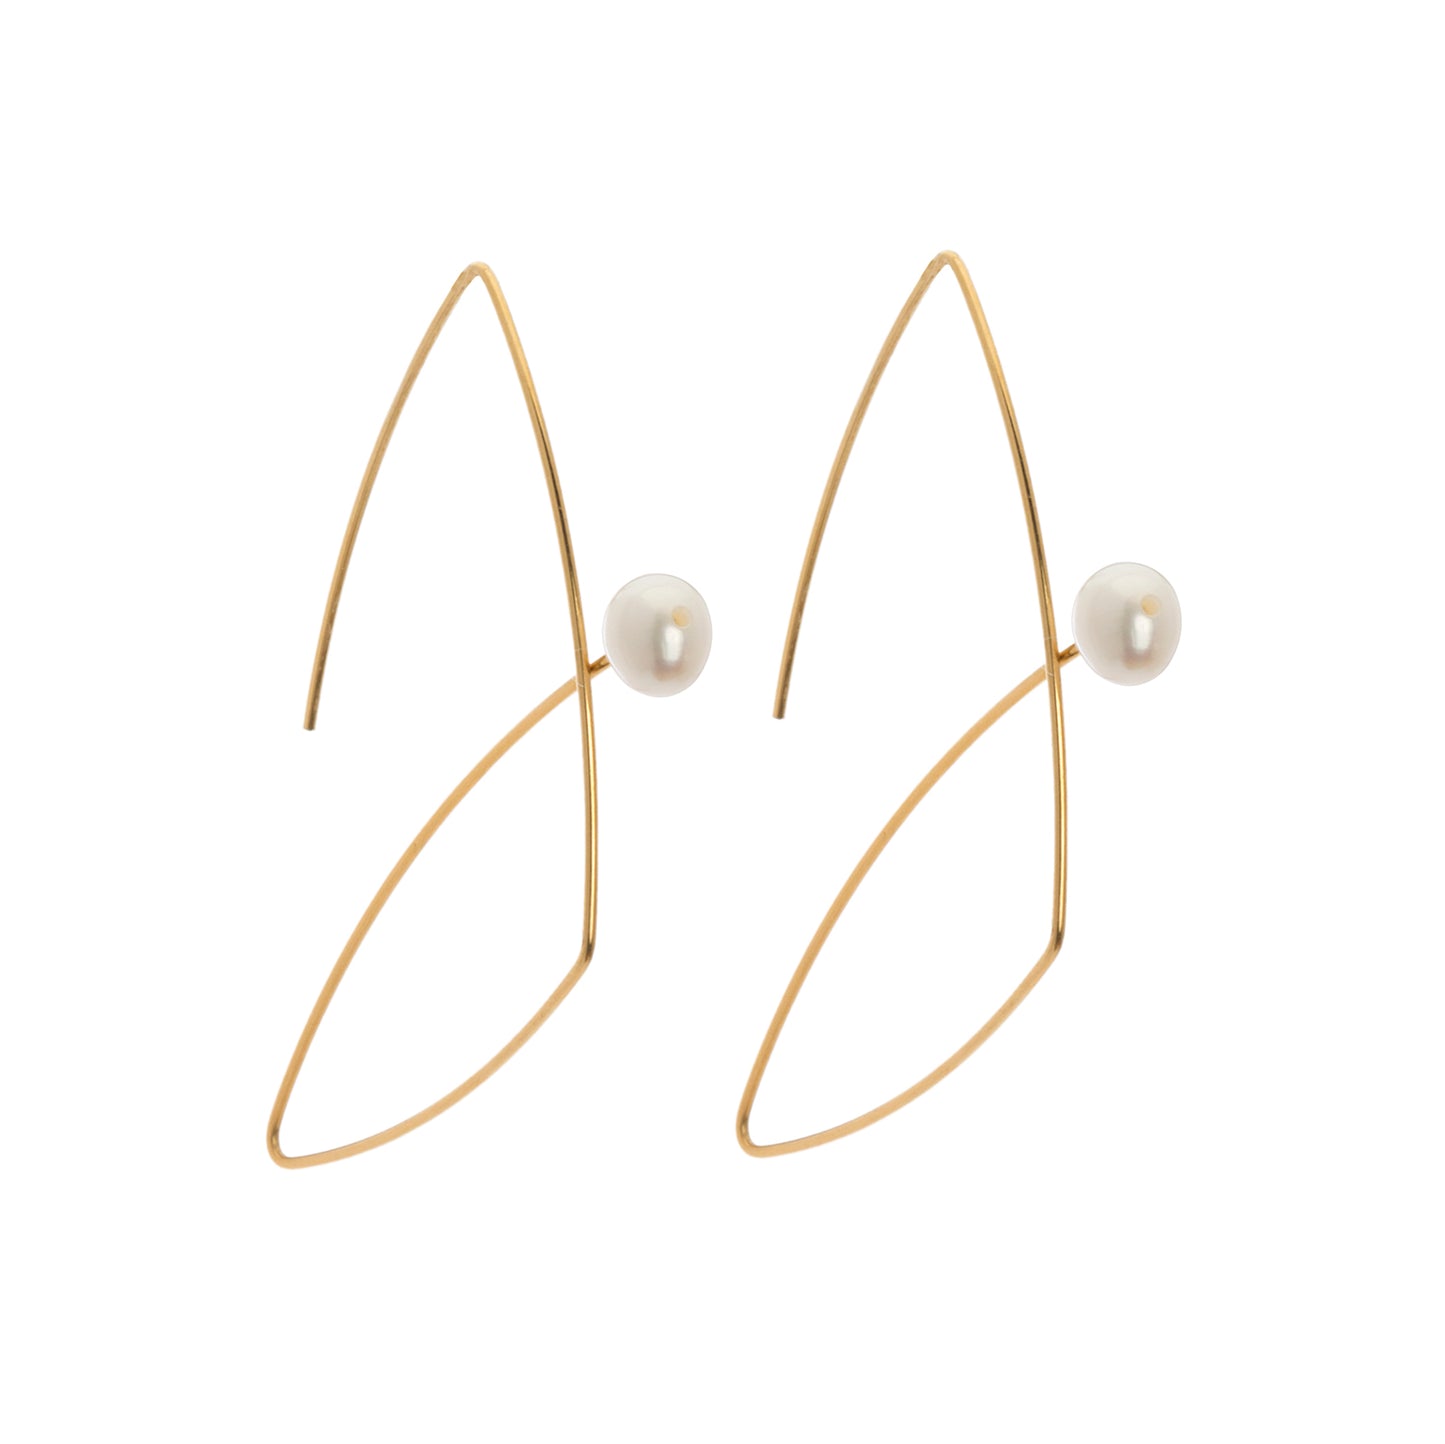 'Morph It!' Earrings with Freshwater Pearls